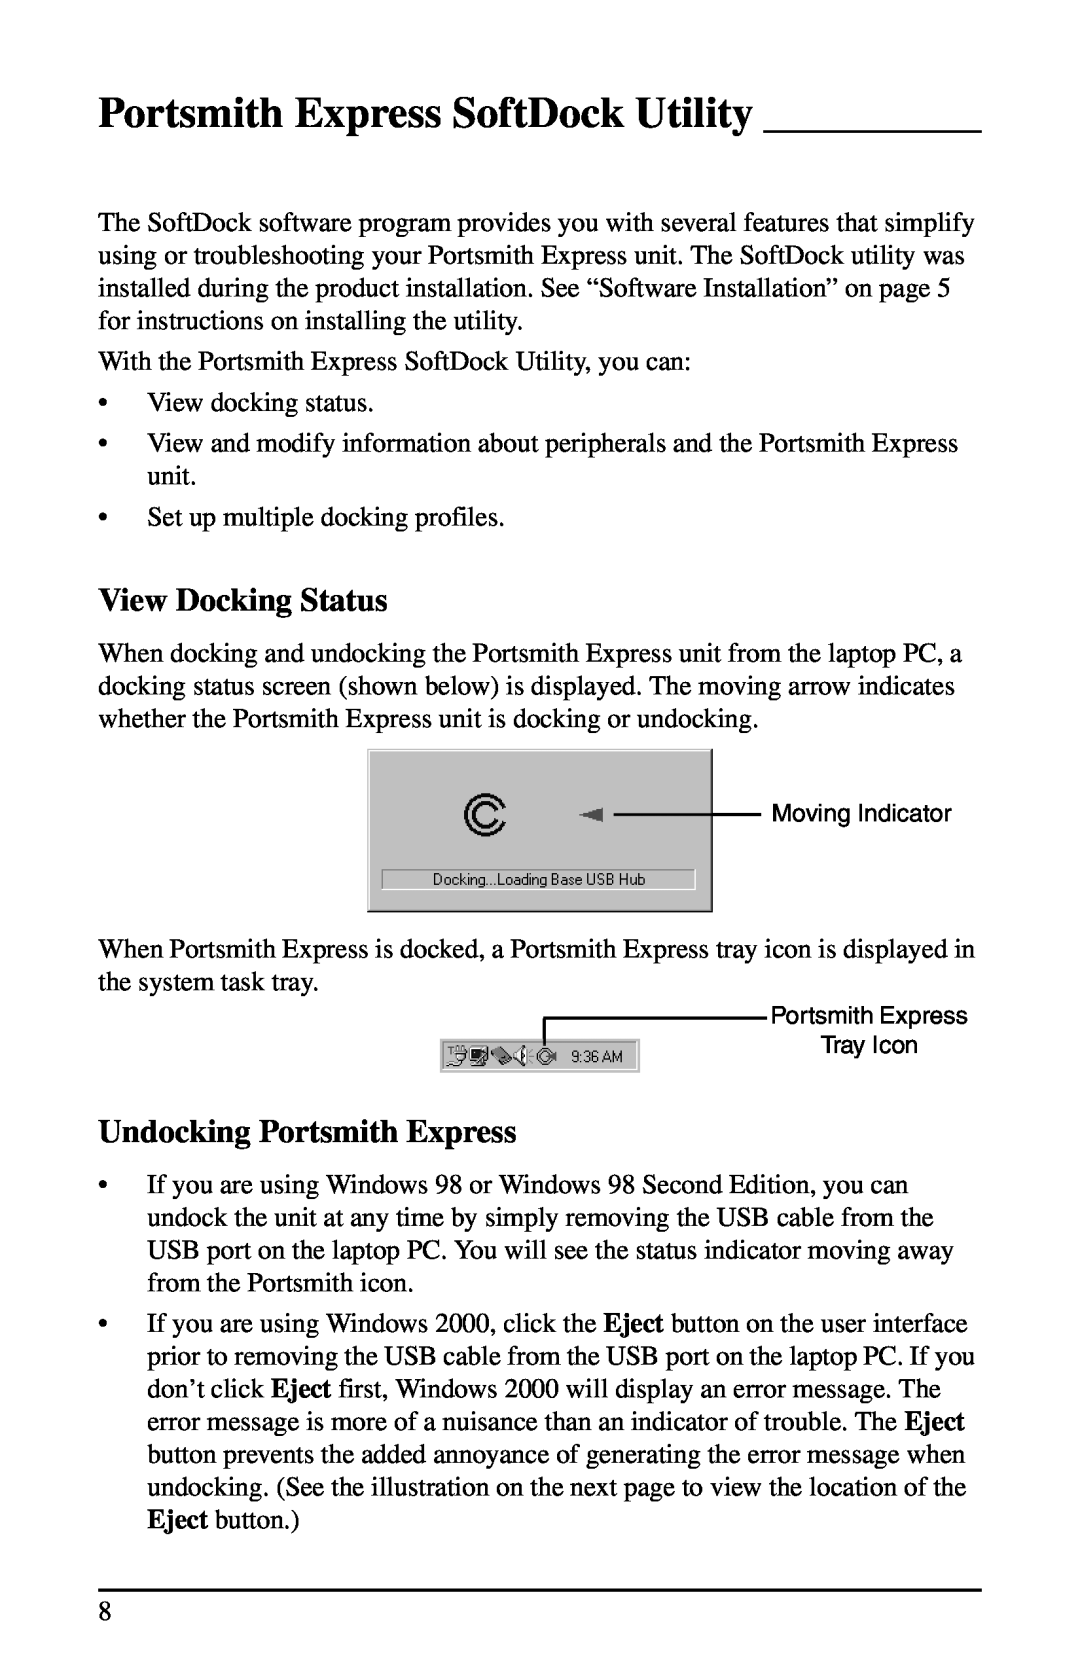 Portsmith USB user manual Portsmith Express SoftDock Utility, View Docking Status, Undocking Portsmith Express 